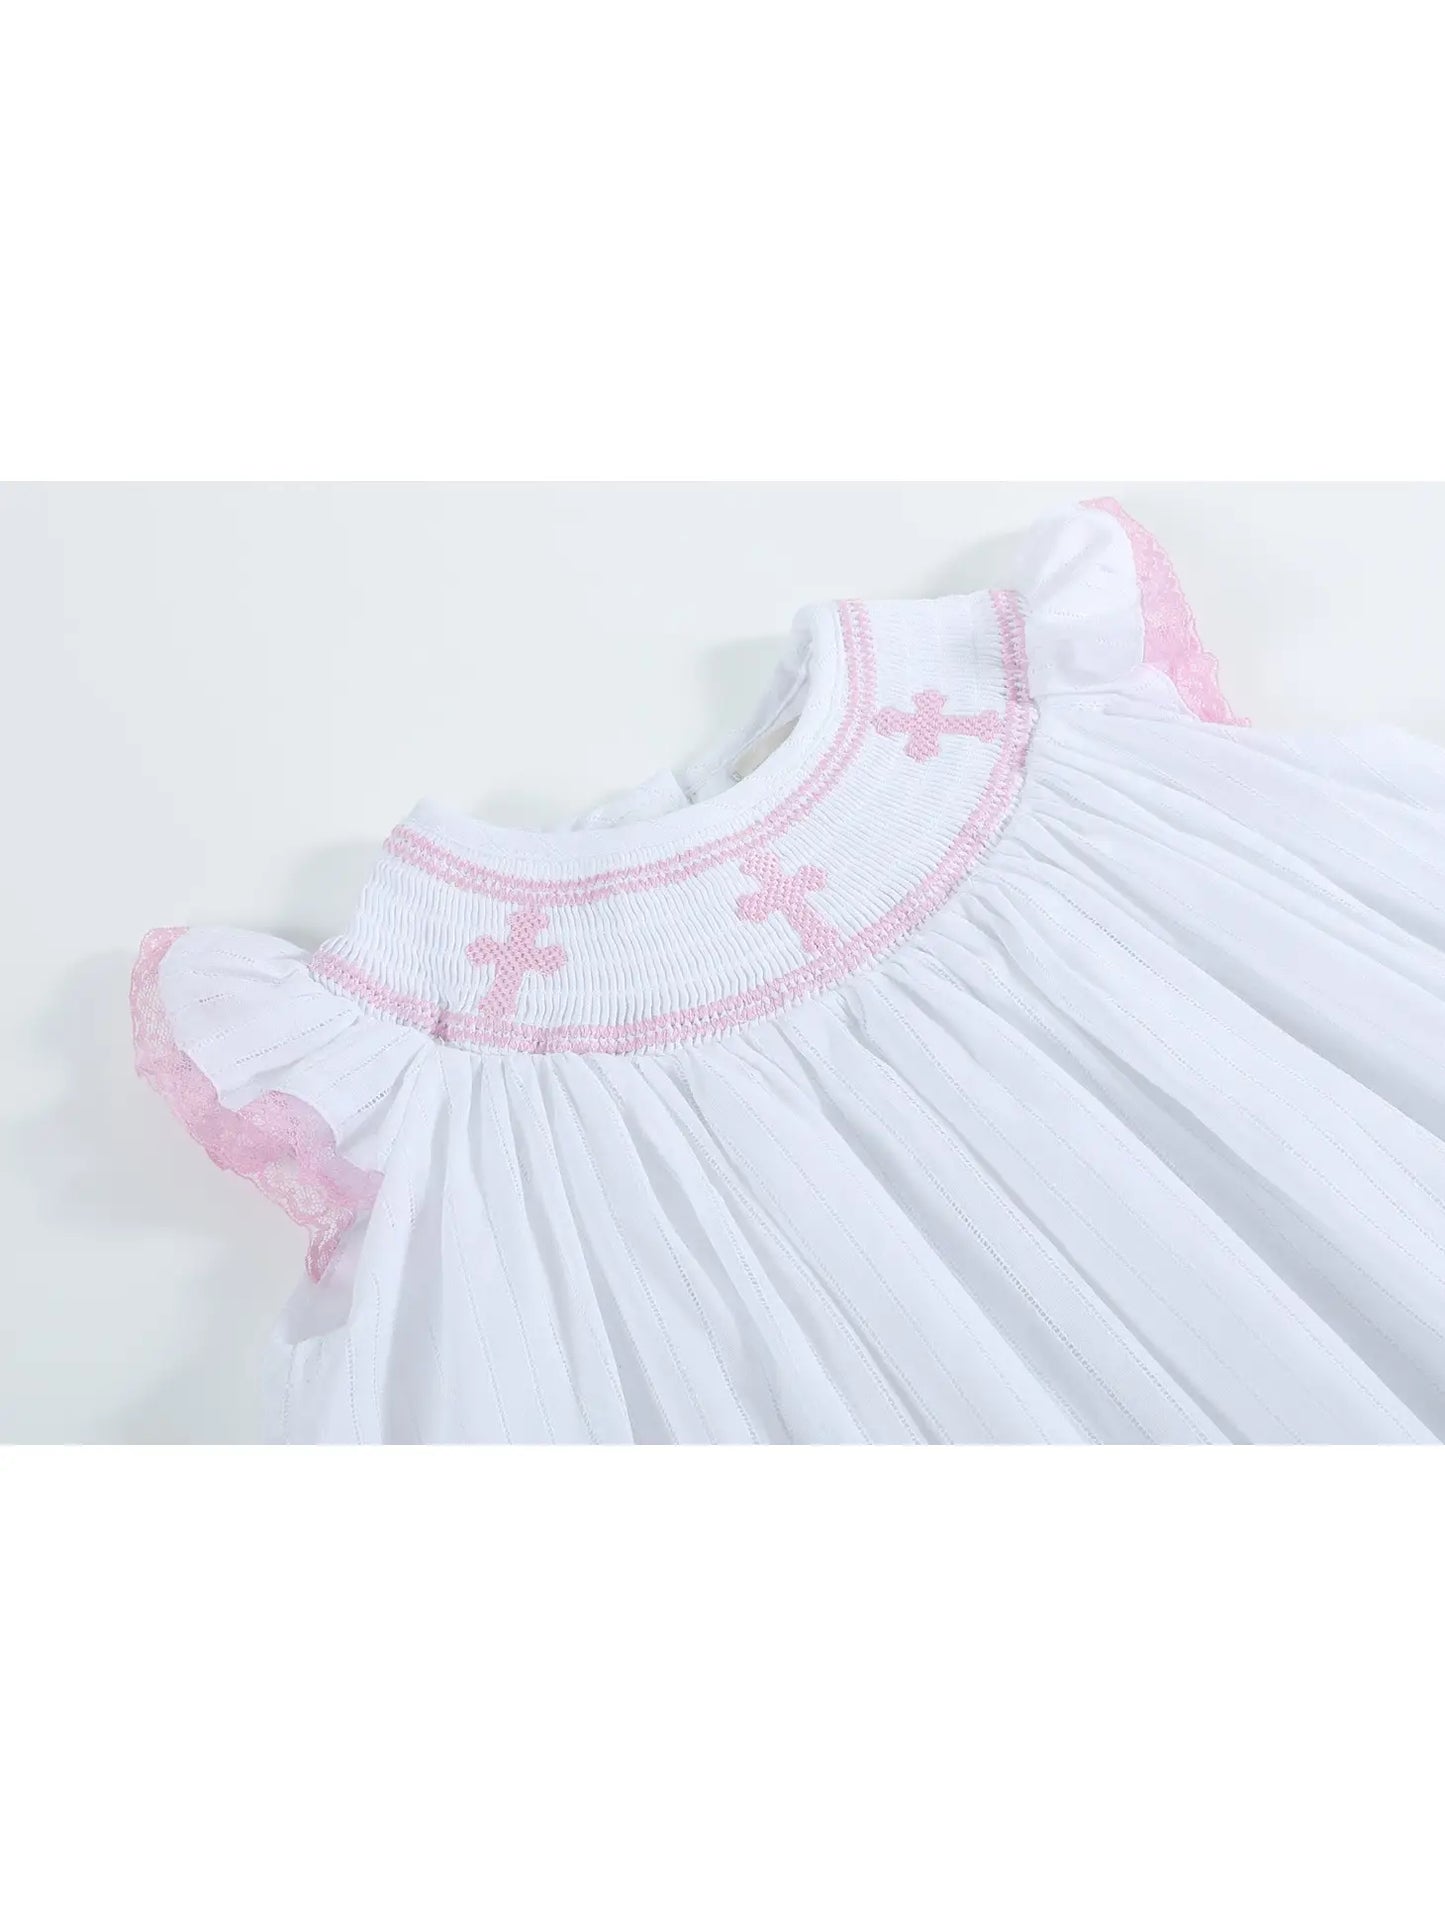 White and Pink Cross Smocked Bishop Dress